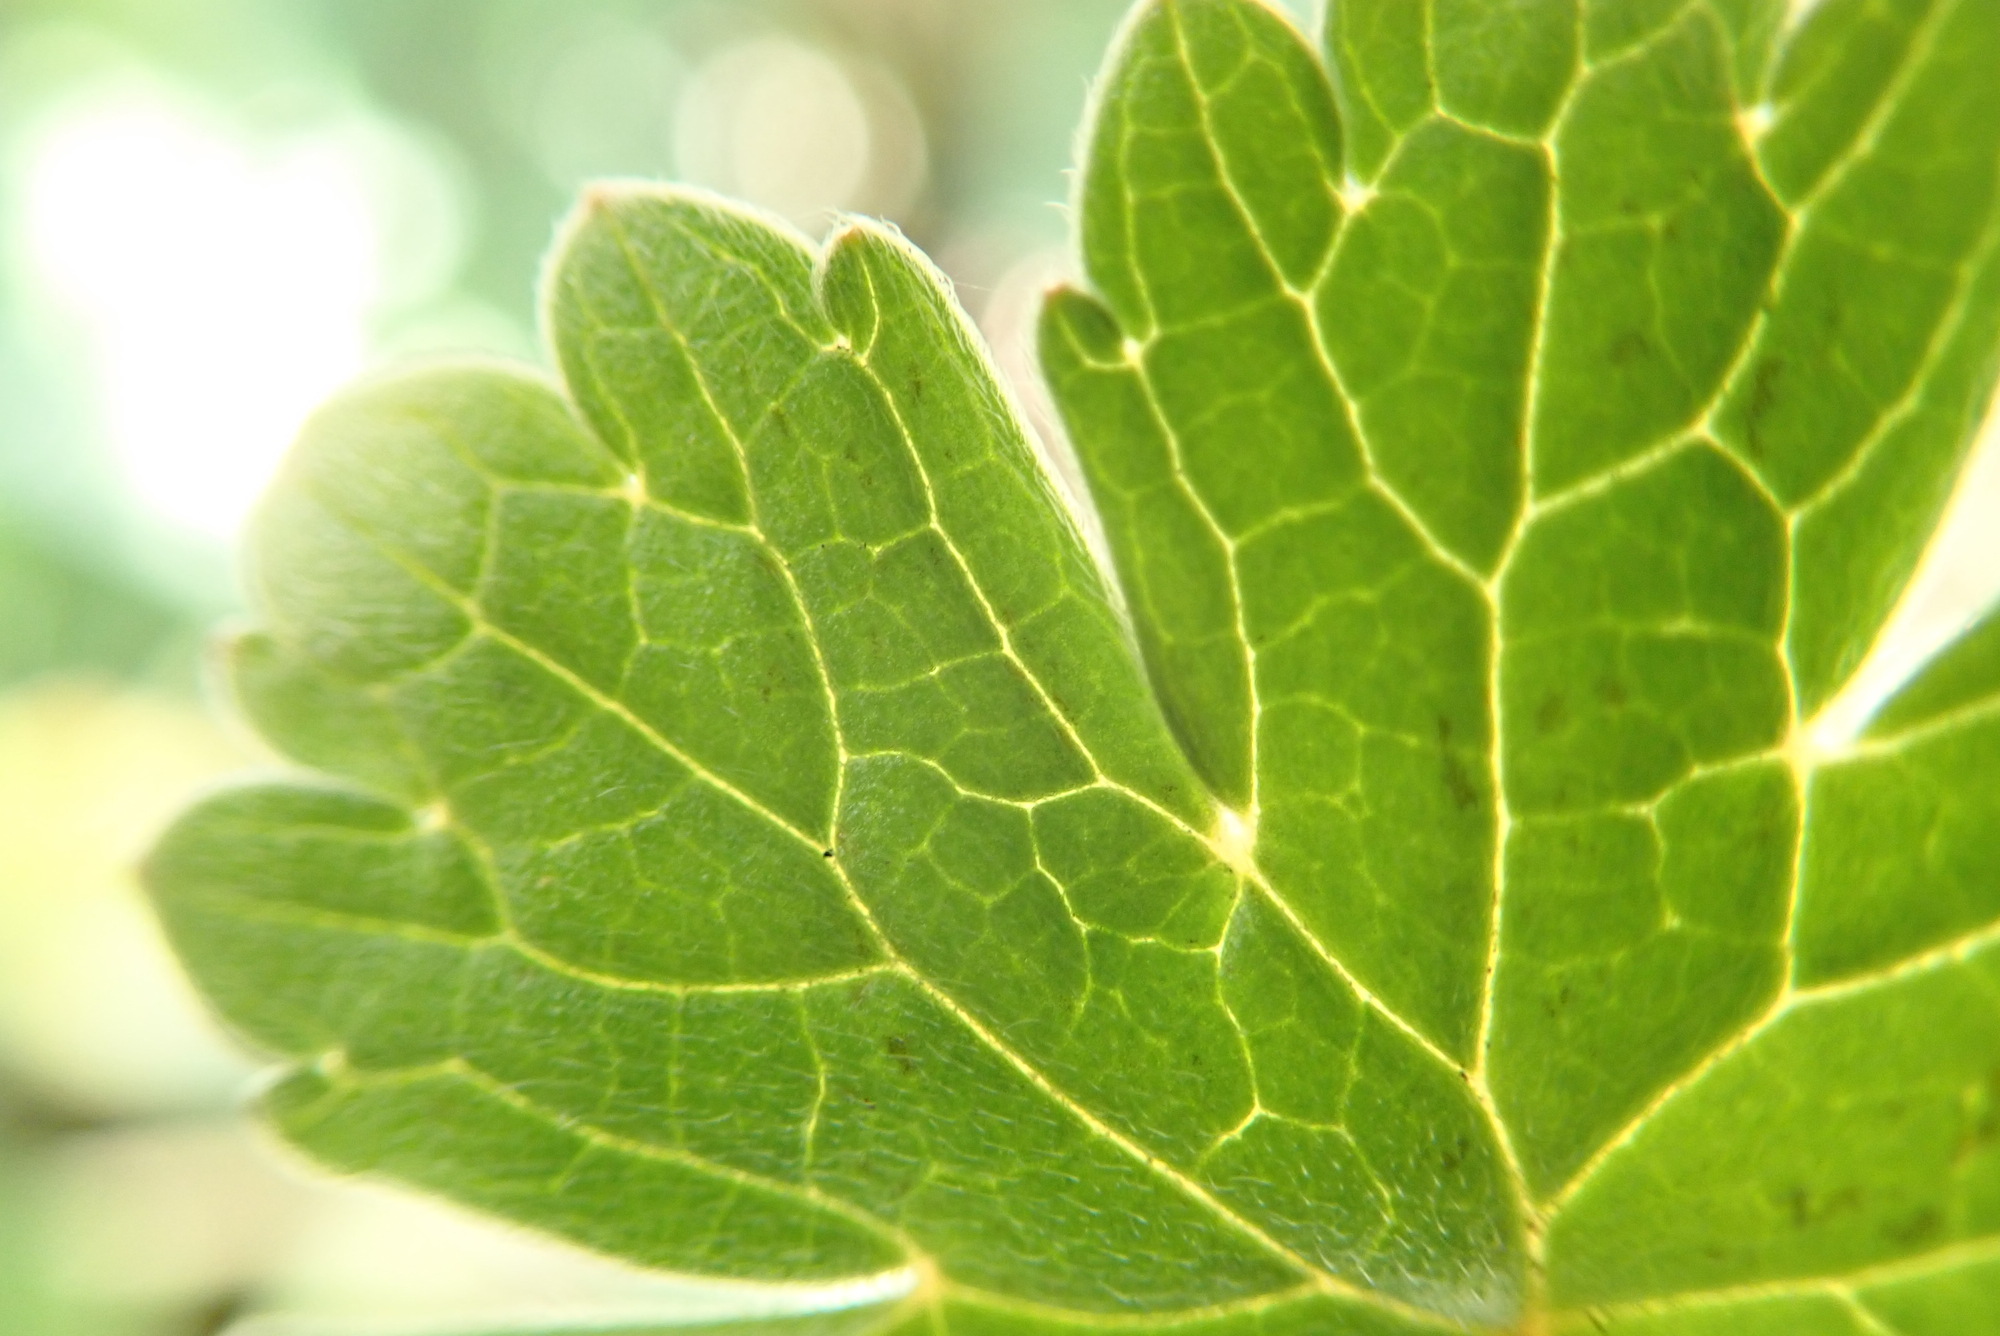 A close up of a leaf